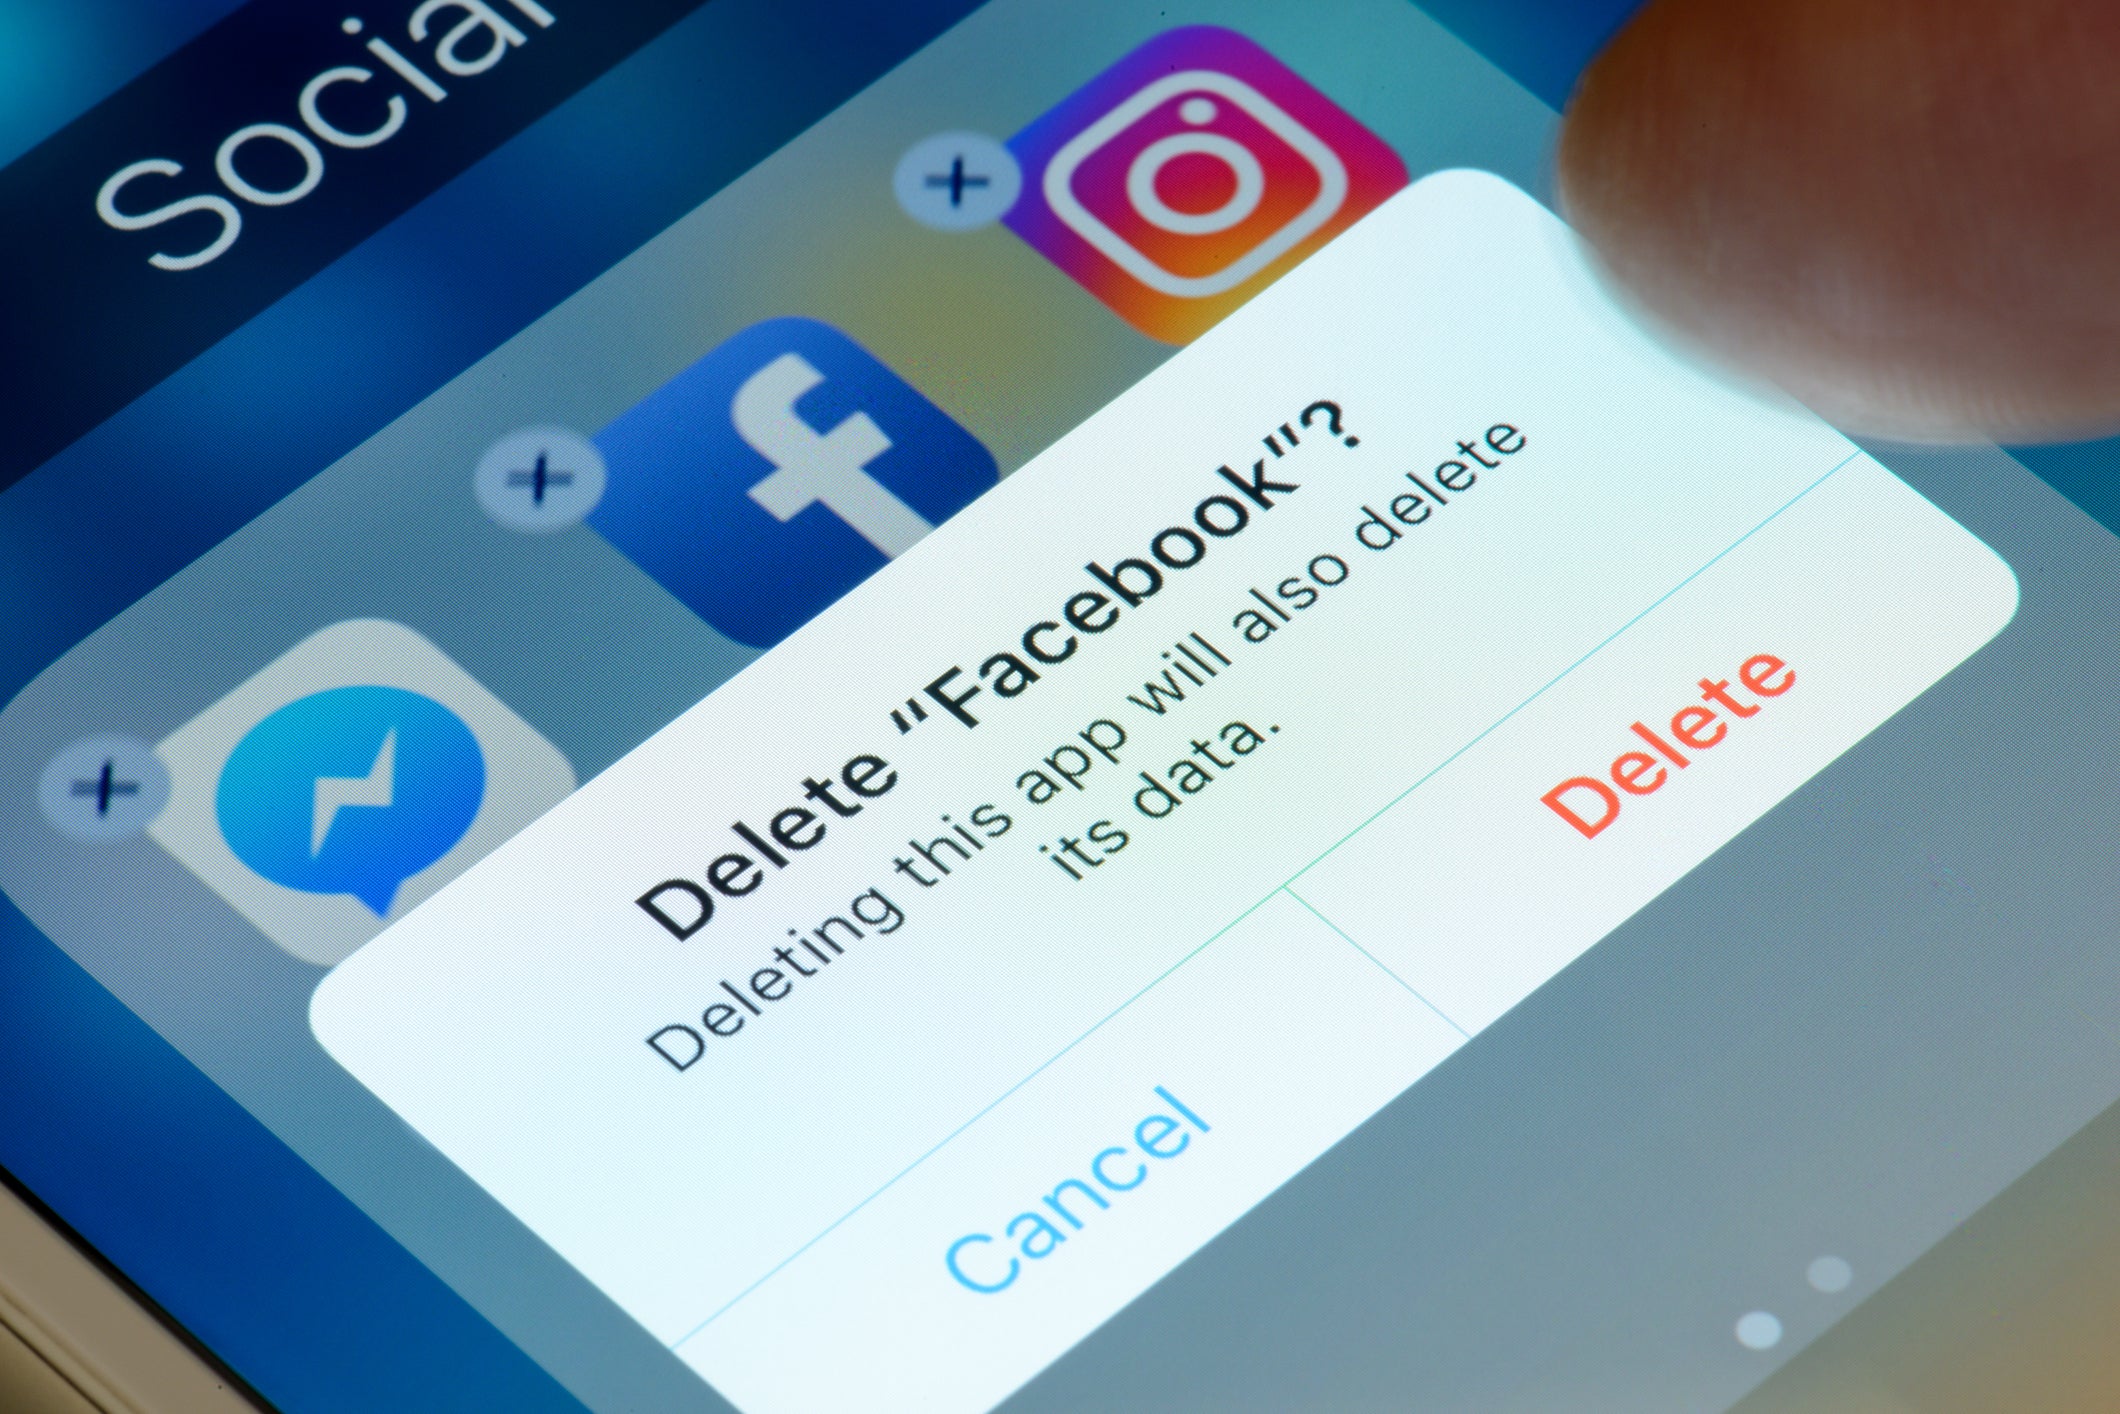 Previous 'Delete Facebook' campaigns have had limited success